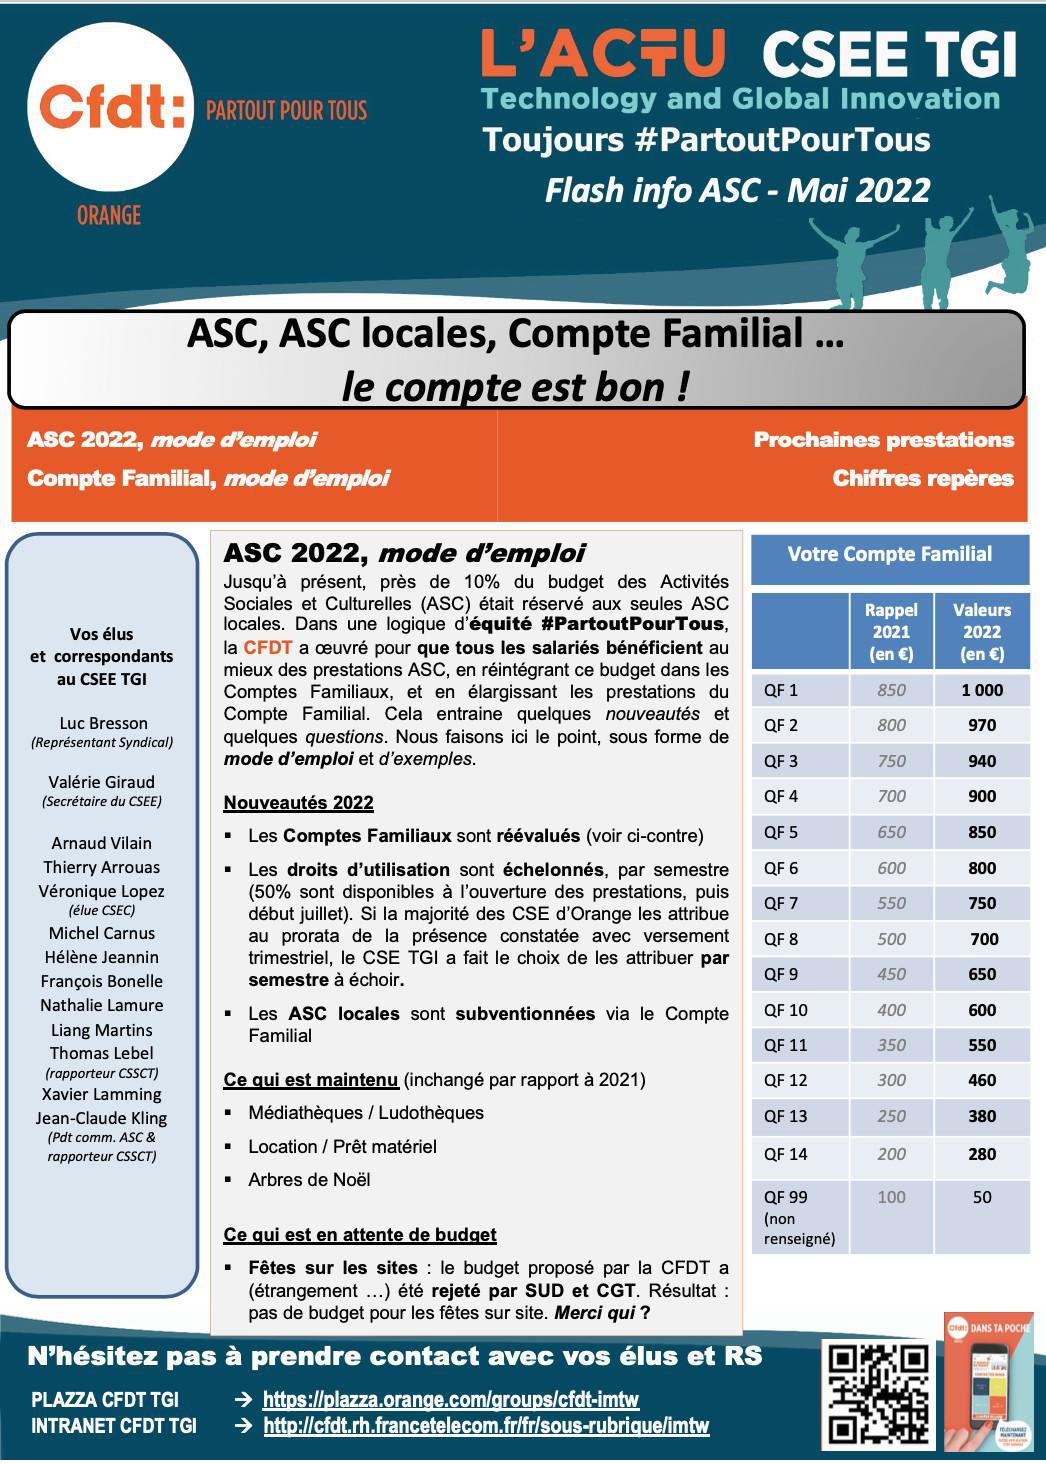 L'ACTU CSEE : Flash Info ASC - Mai 2022